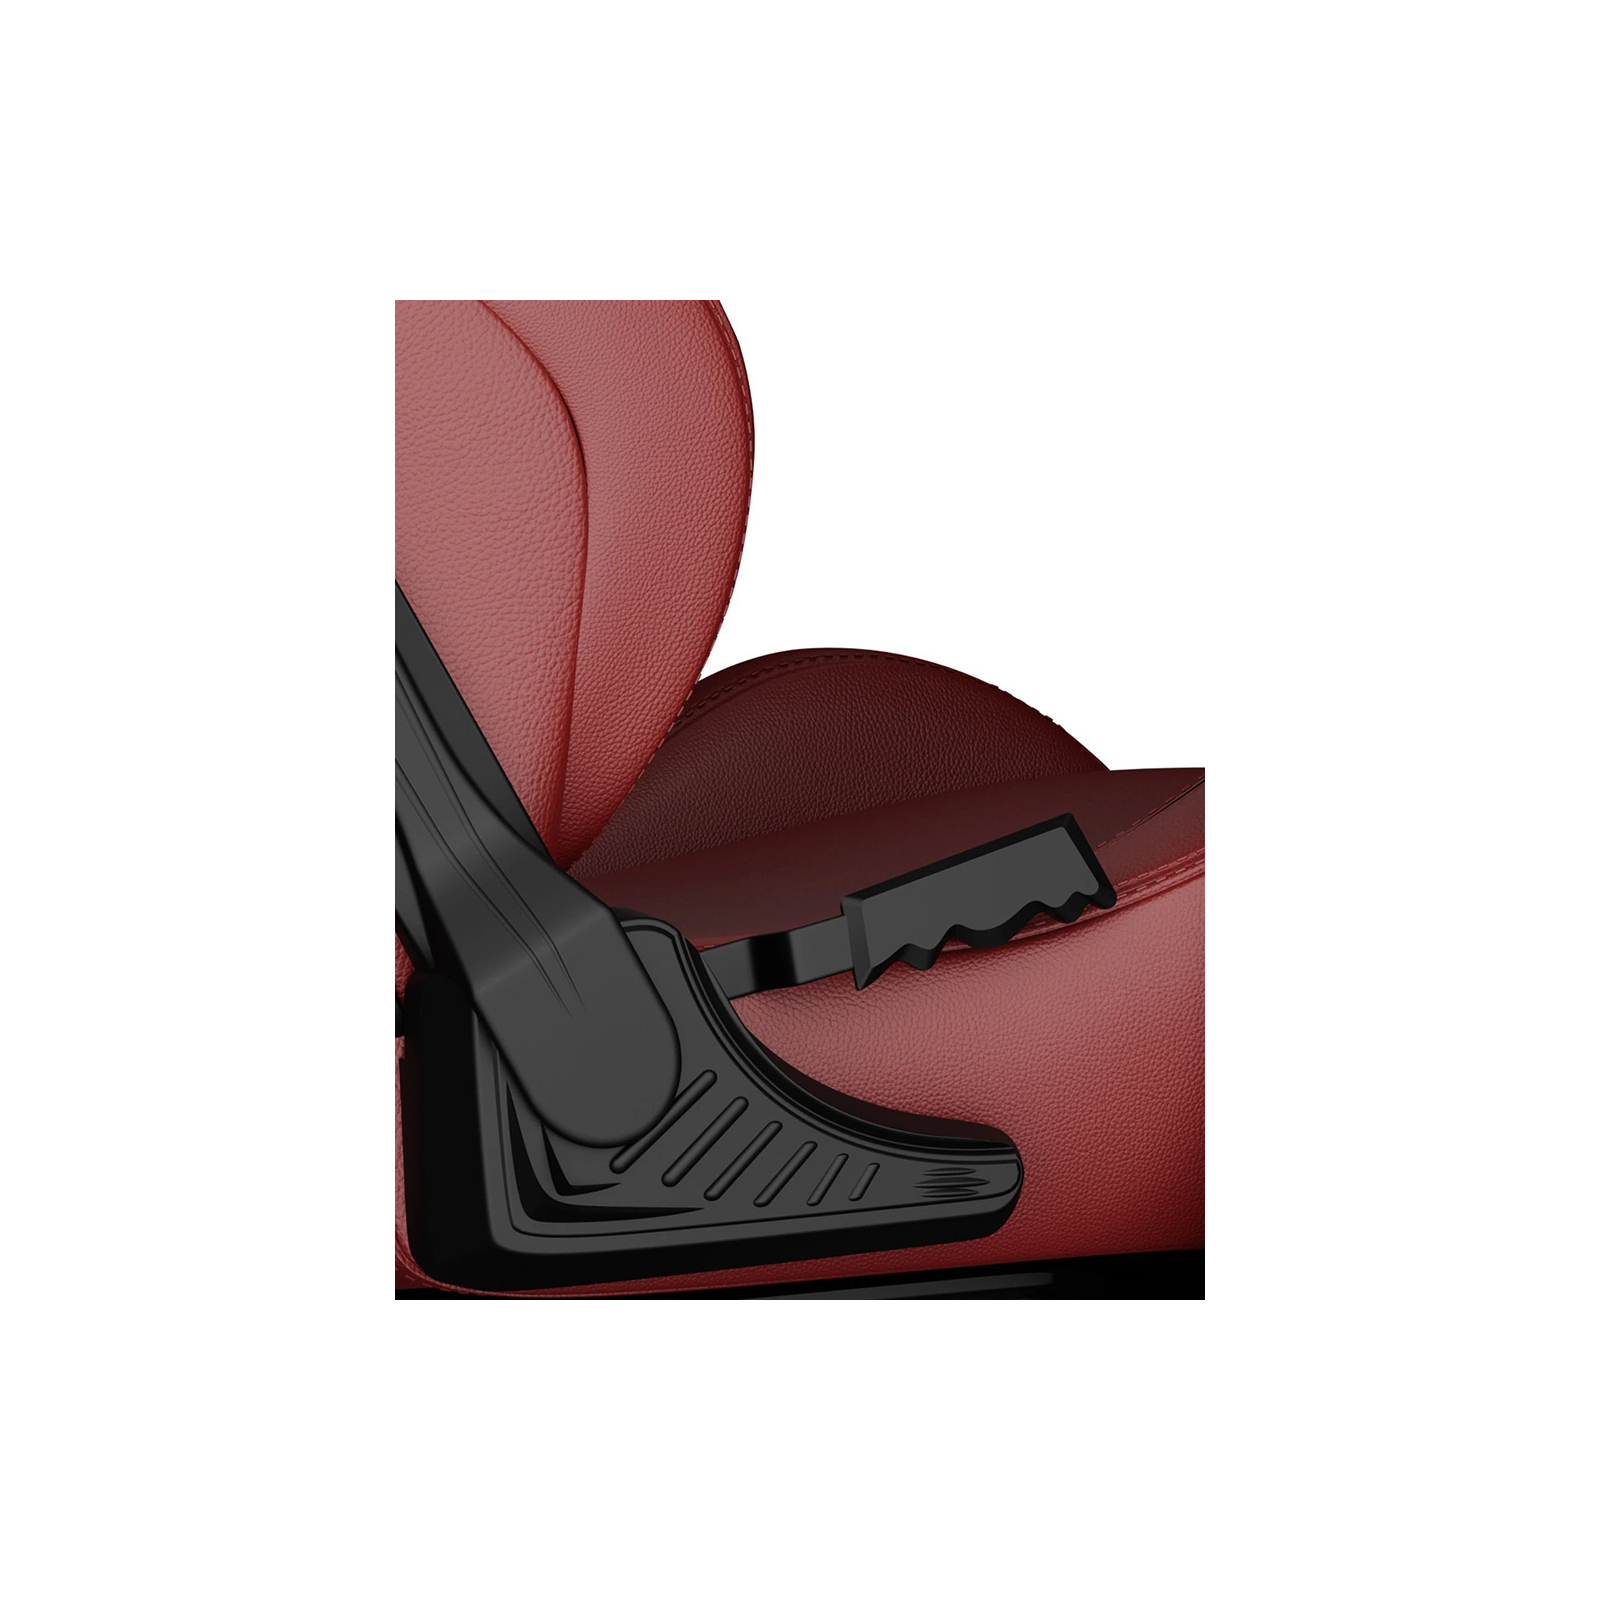 Кресло игровое Anda Seat Kaiser 2 Size XL White (AD12XL-07-W-PV-W01) изображение 7